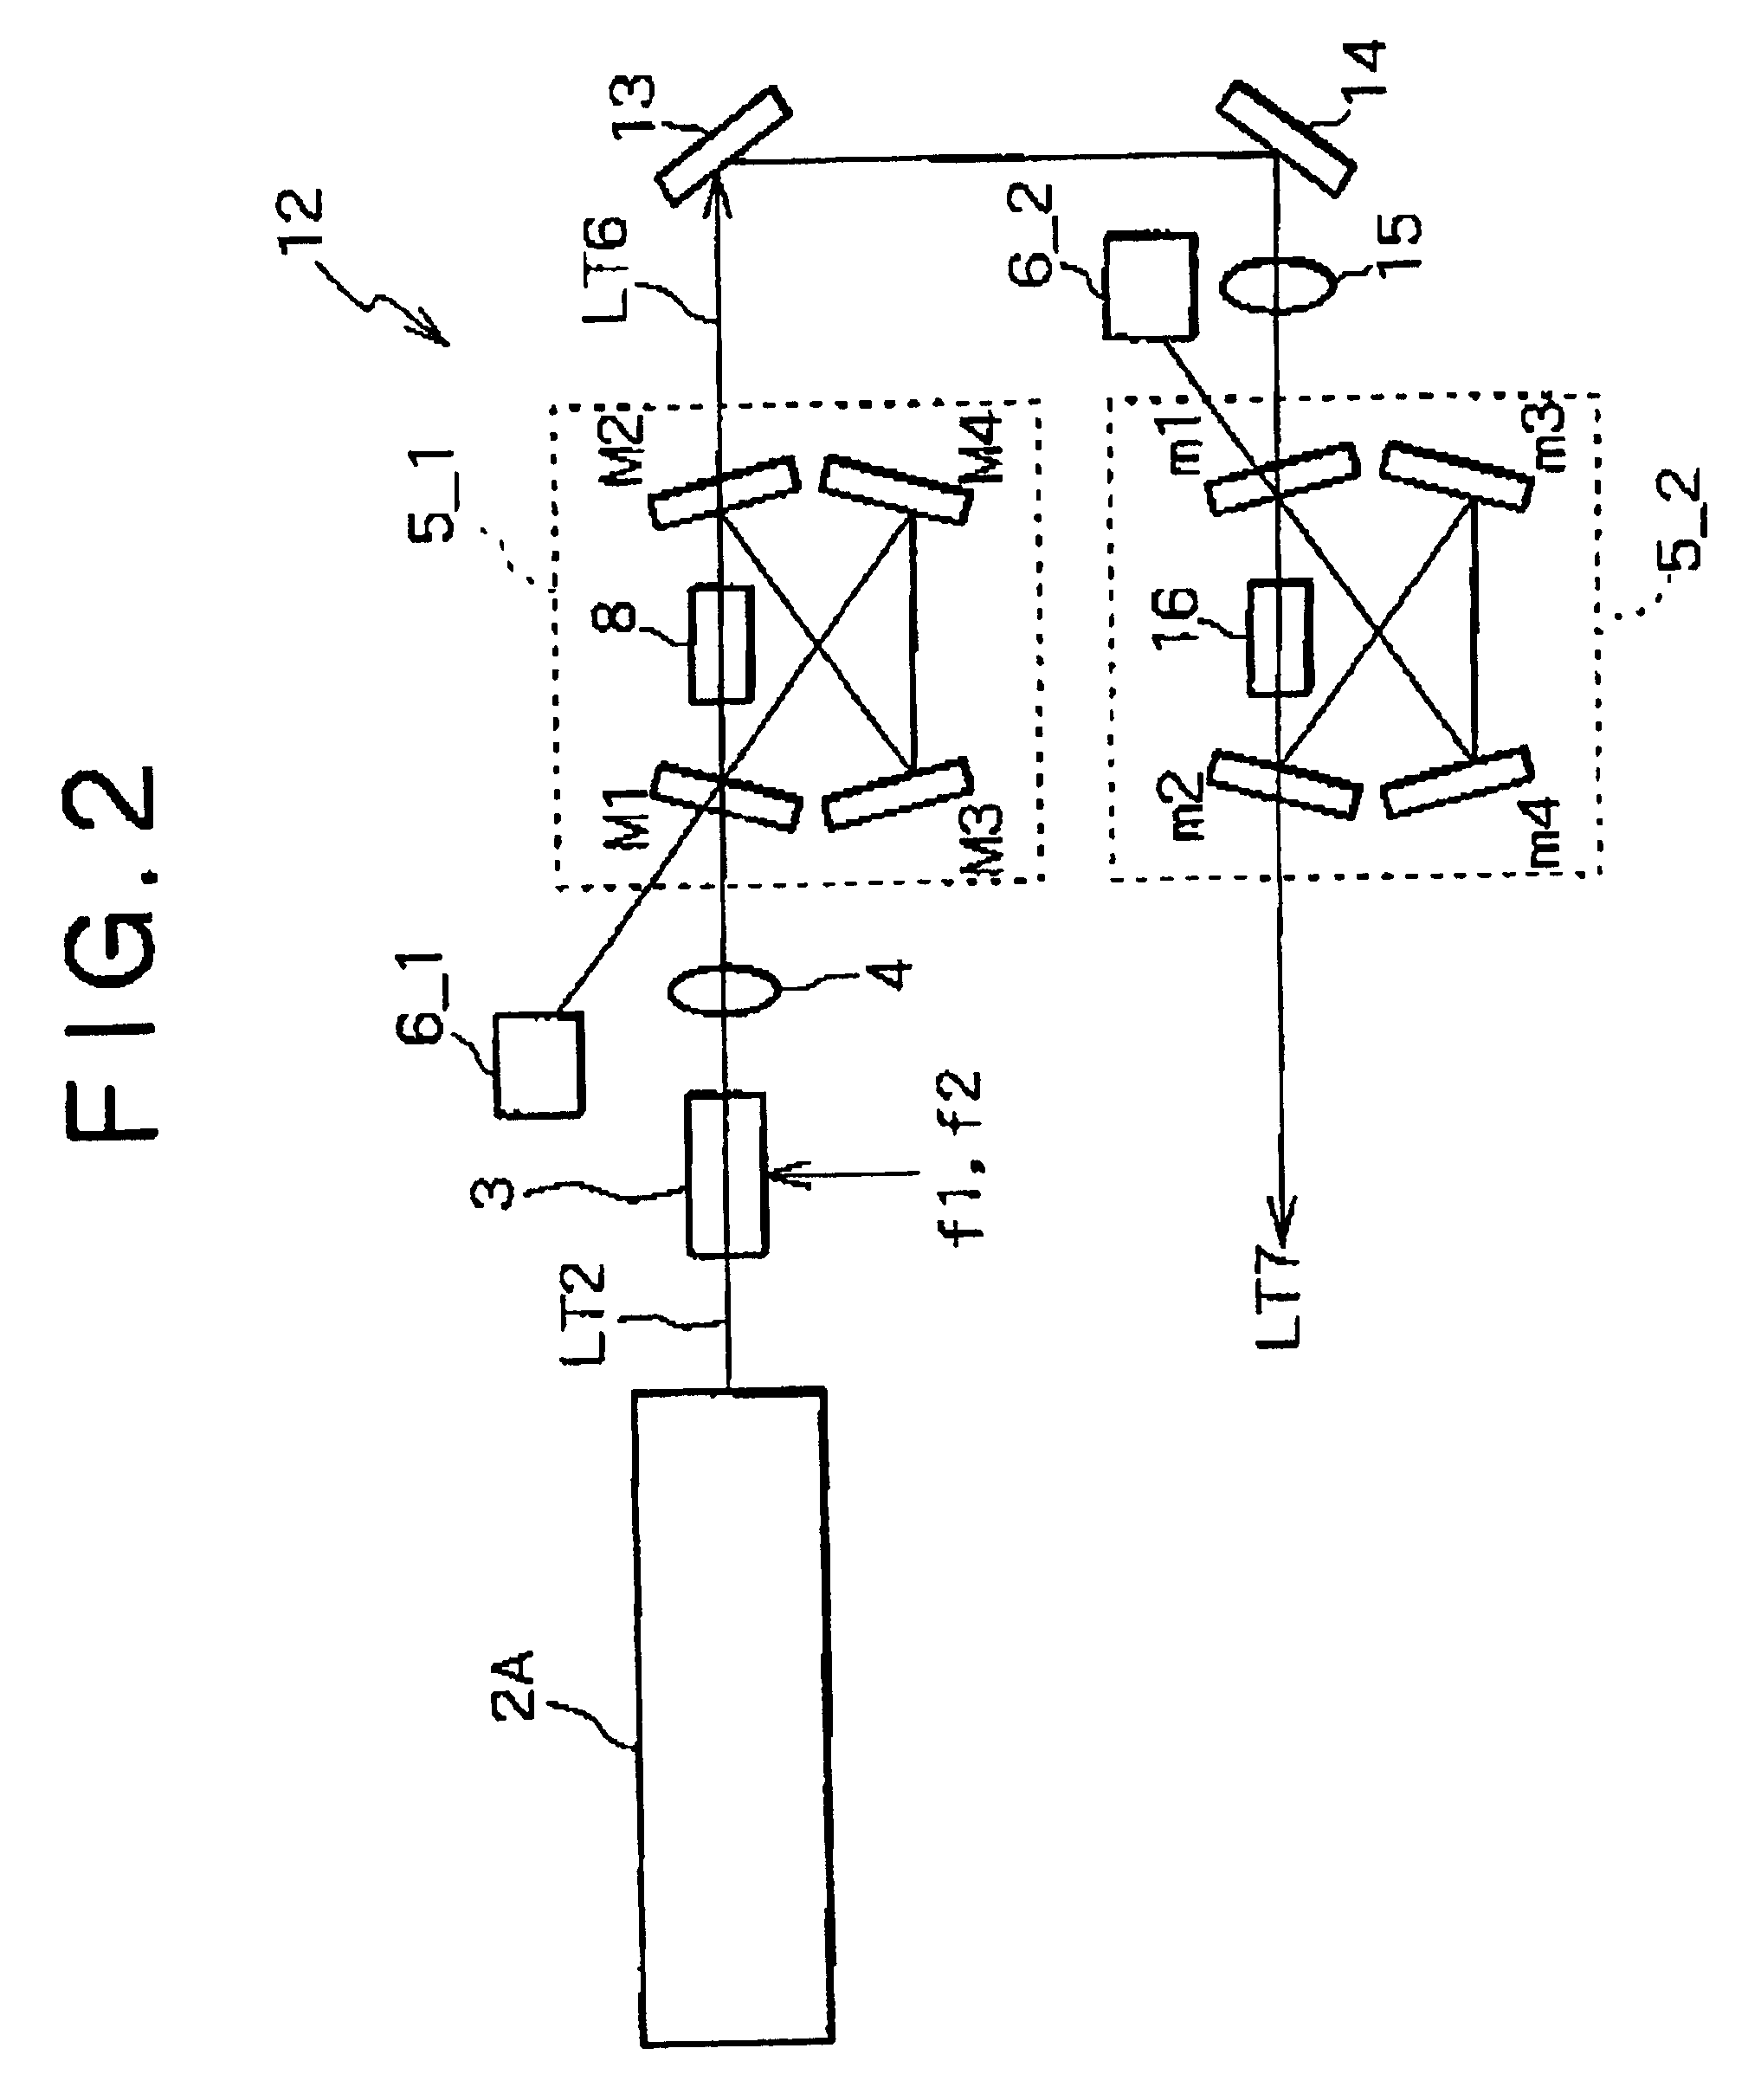 Laser light generating apparatus and method